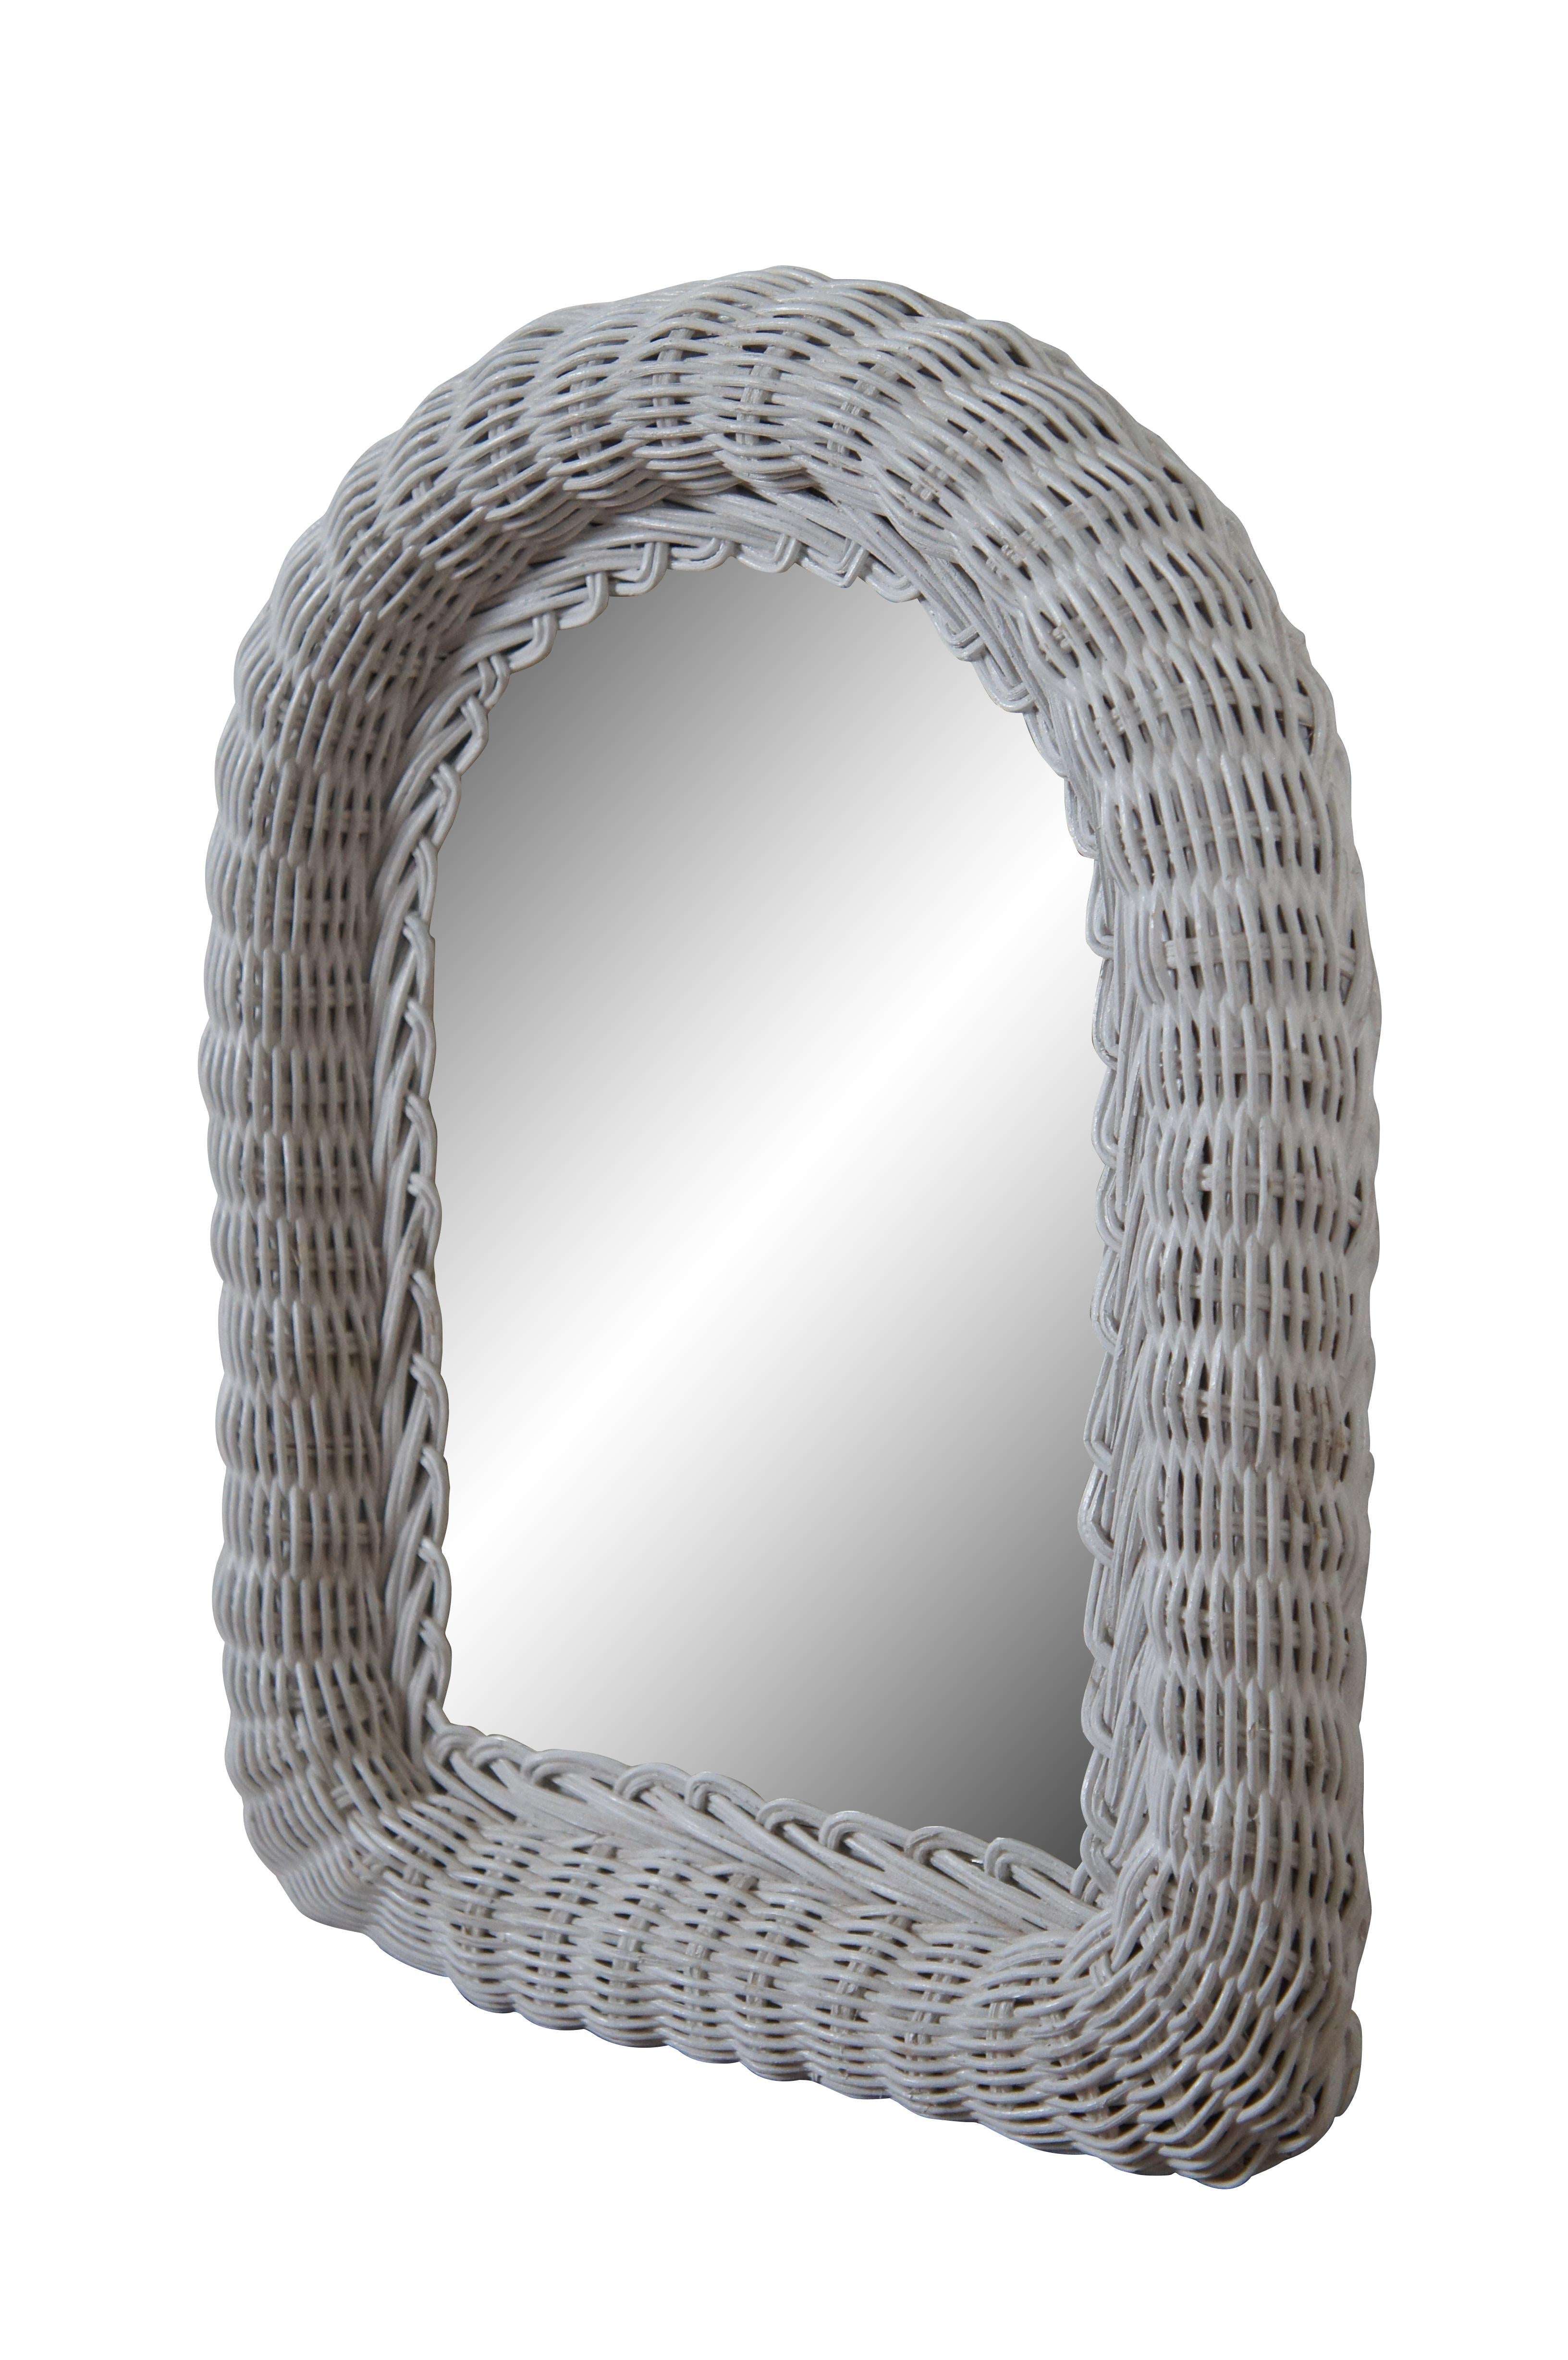 Vintage arched white wicker vanity mirror.

Dimensions:
12